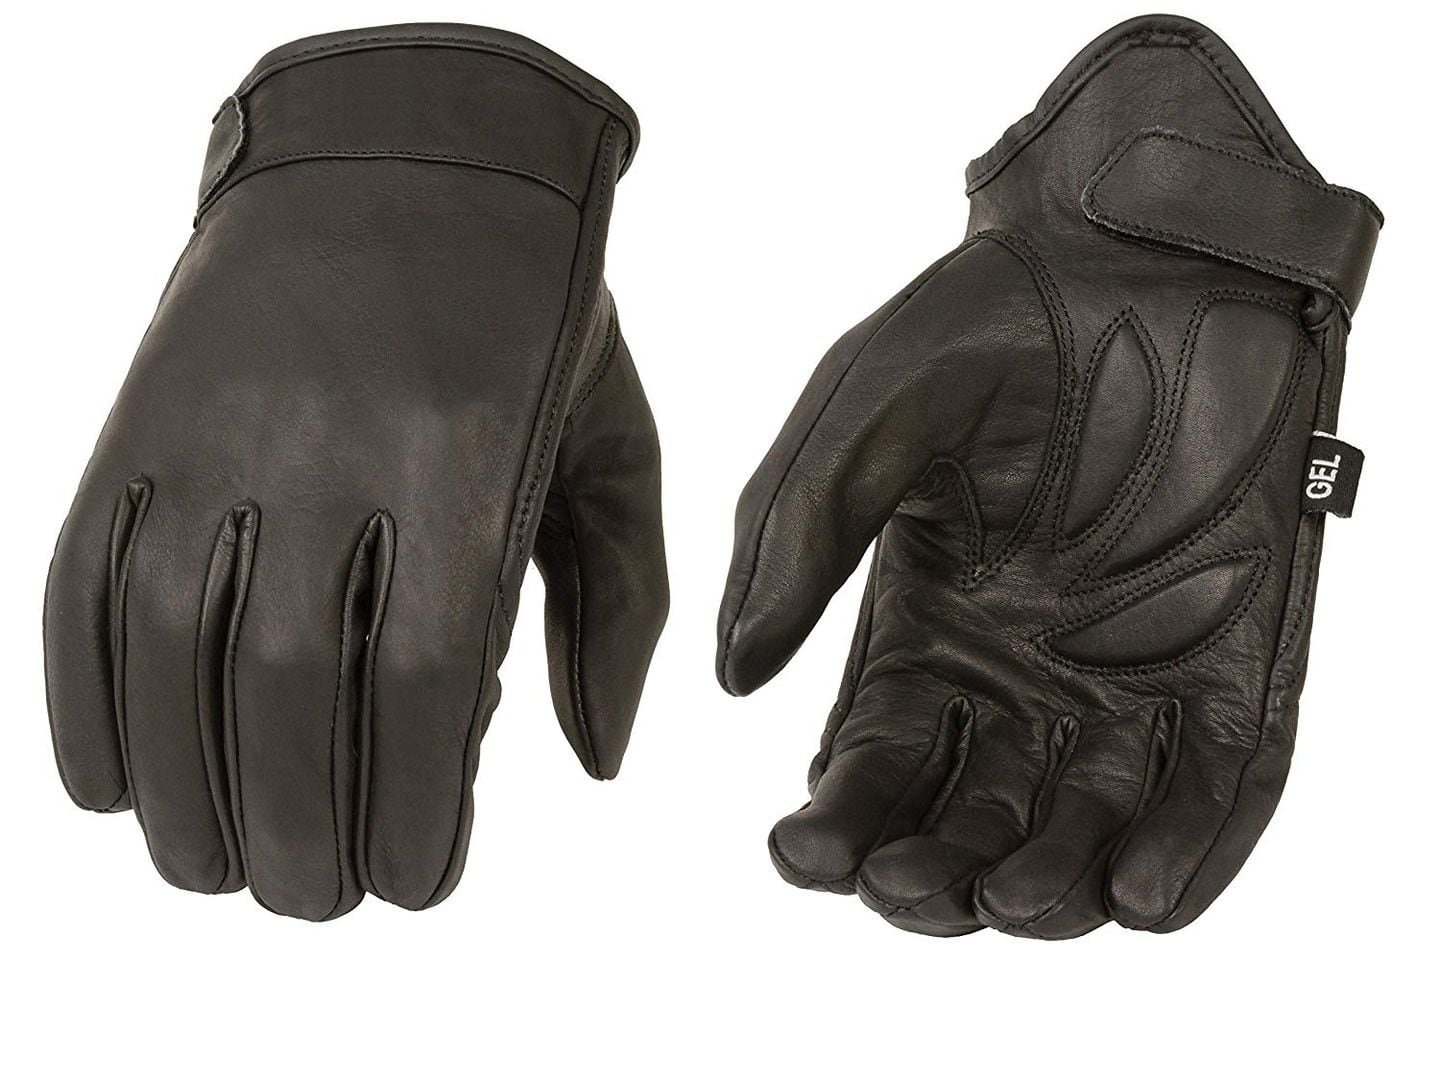 Men's Premium Leather Protective Cruiser Street Motorcycle Biker Gel Gloves